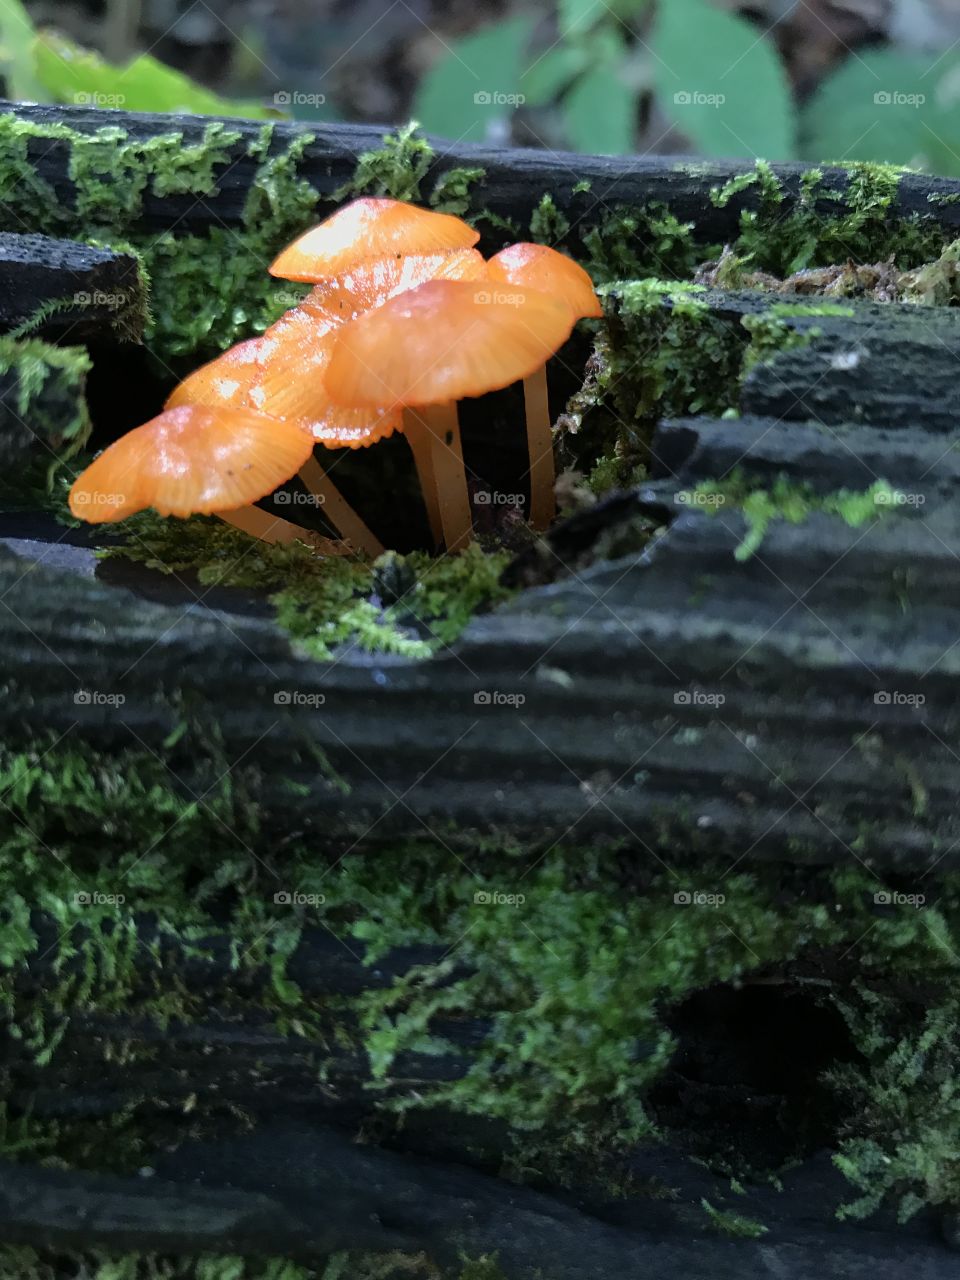 Tiny little orange mushrooms growing on a log. 